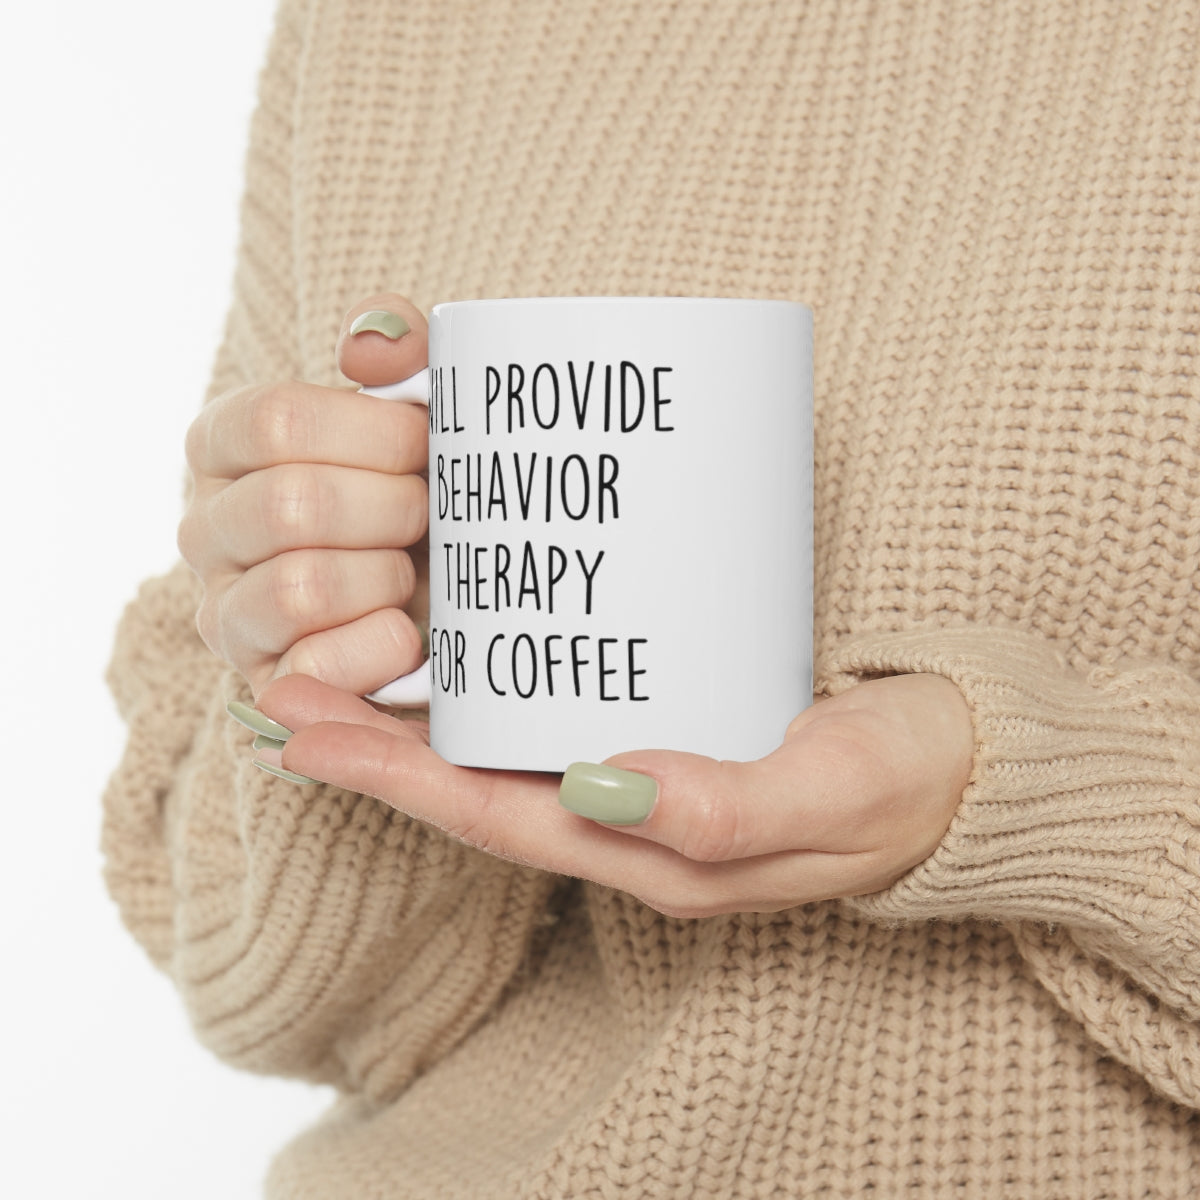 Will Provide Behavior therapy for coffee Ceramic Mug 11oz